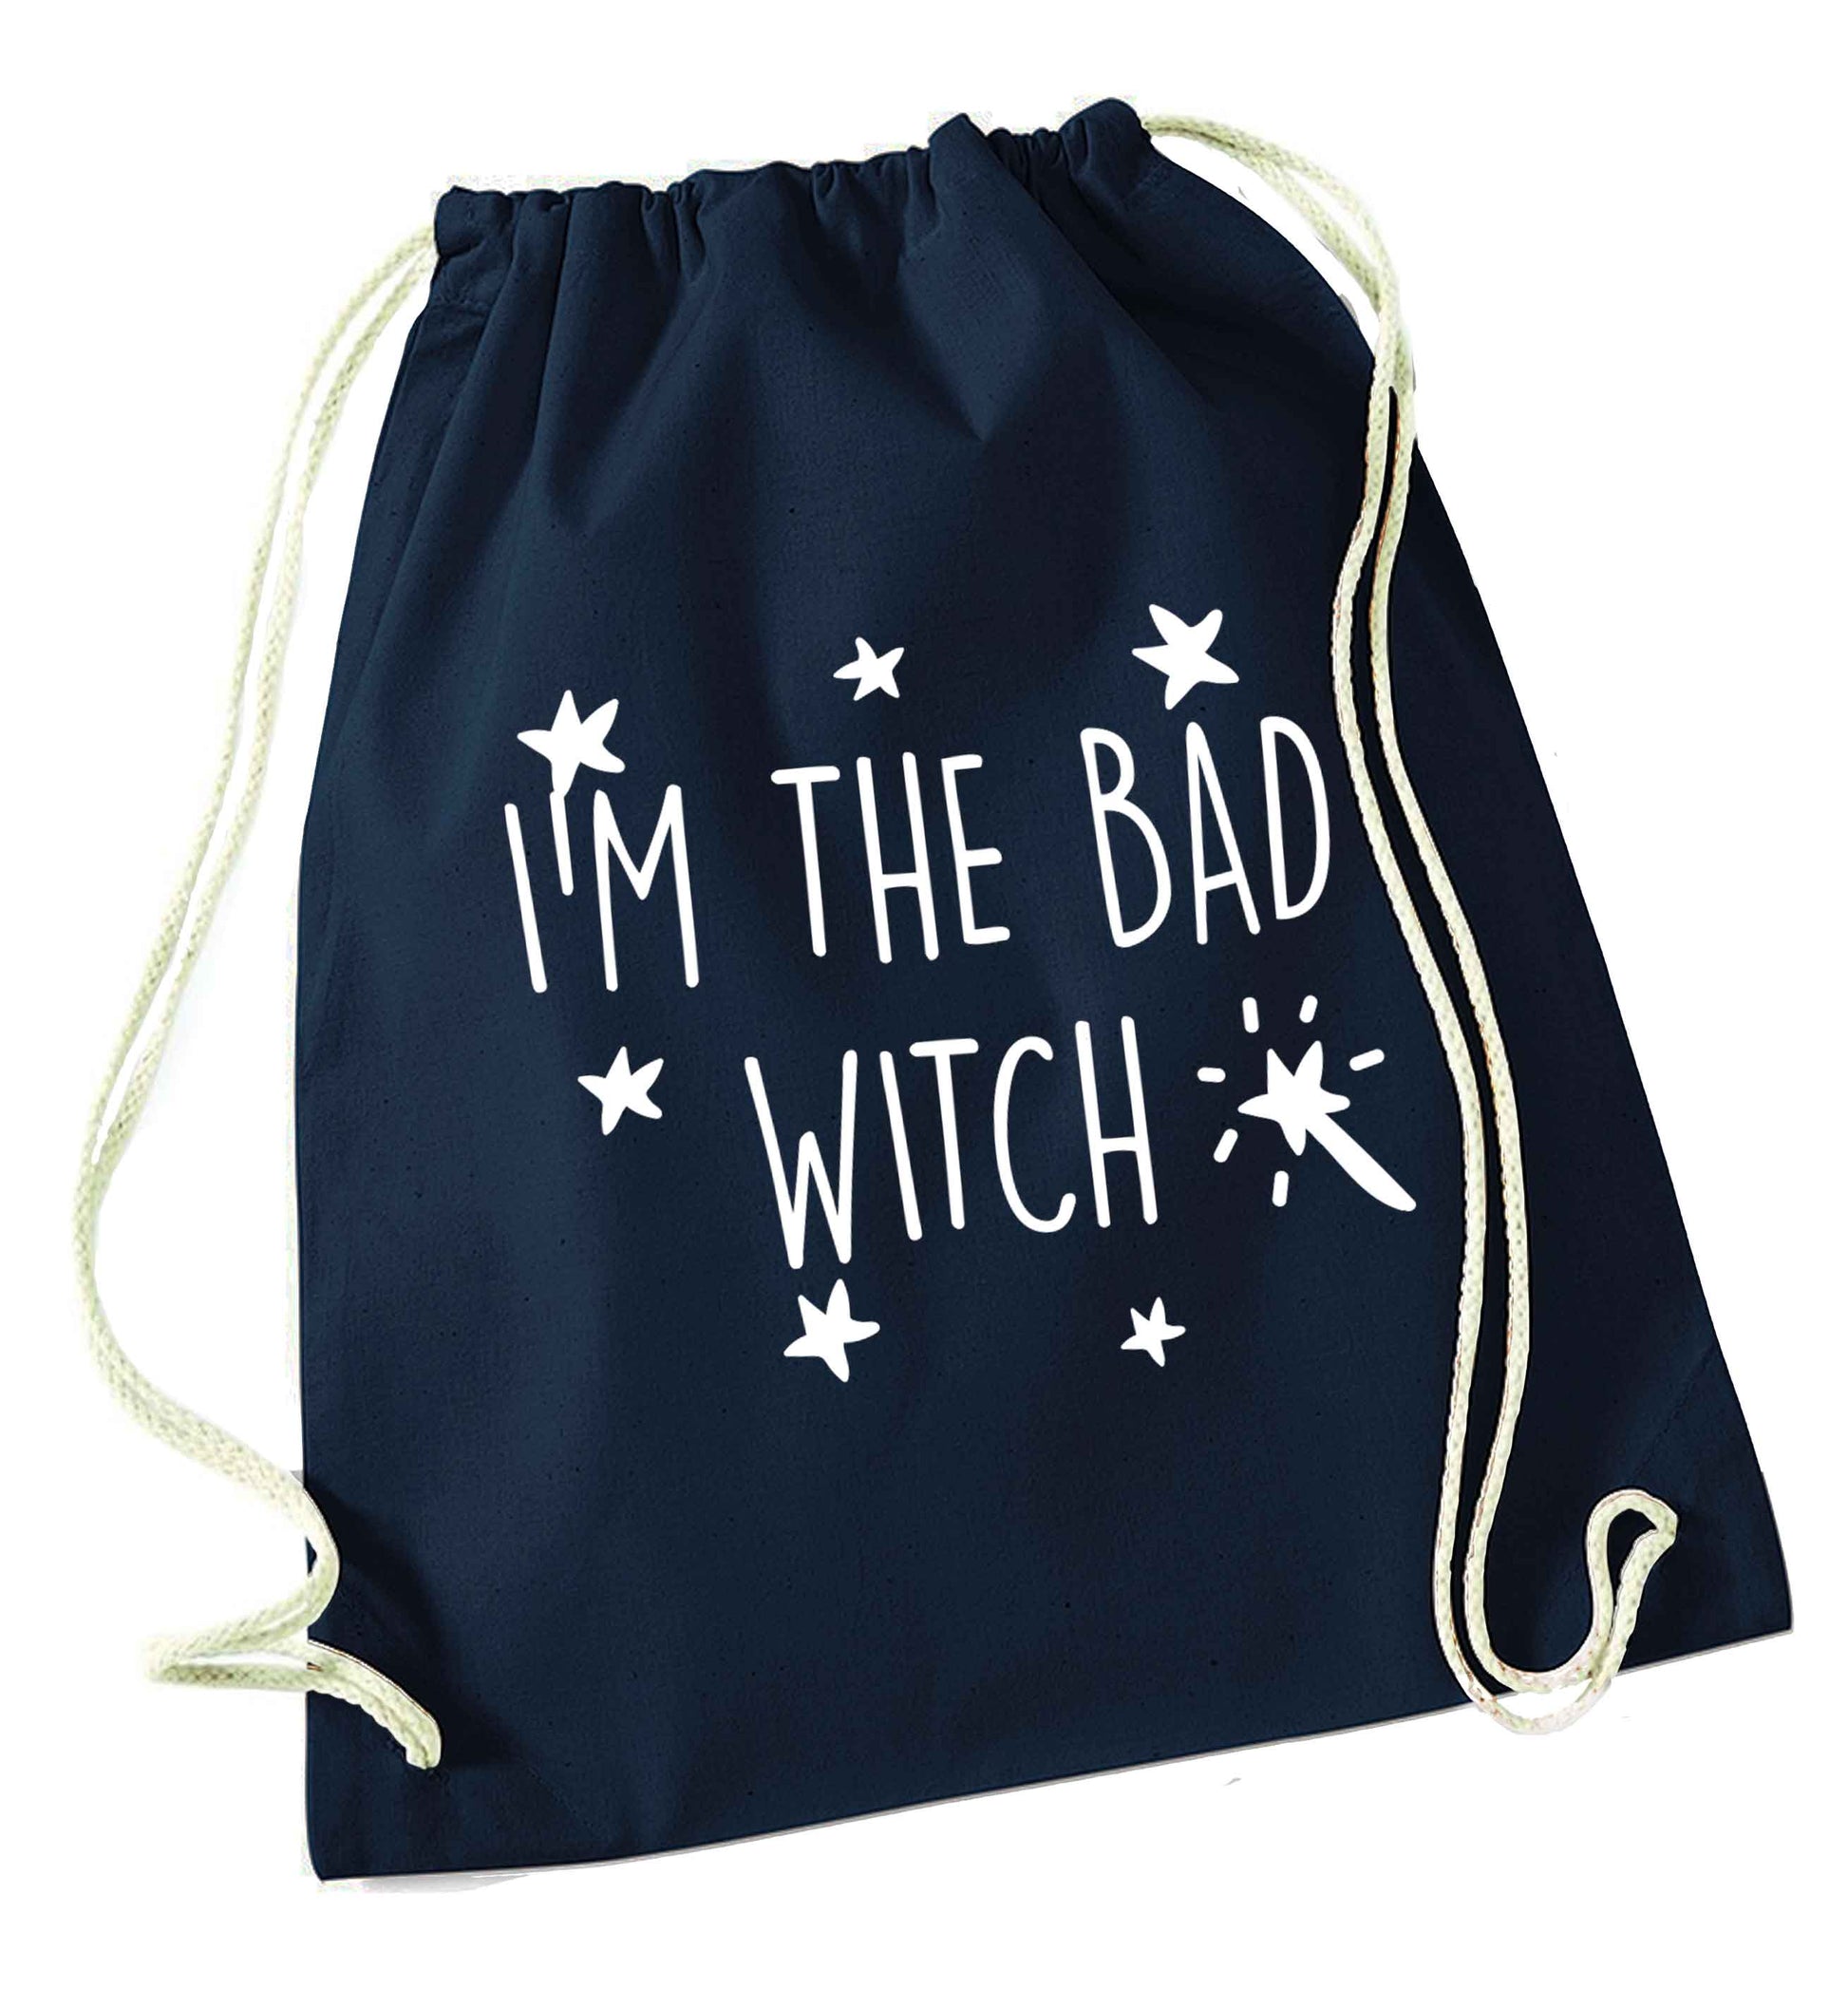 Bad witch navy drawstring bag